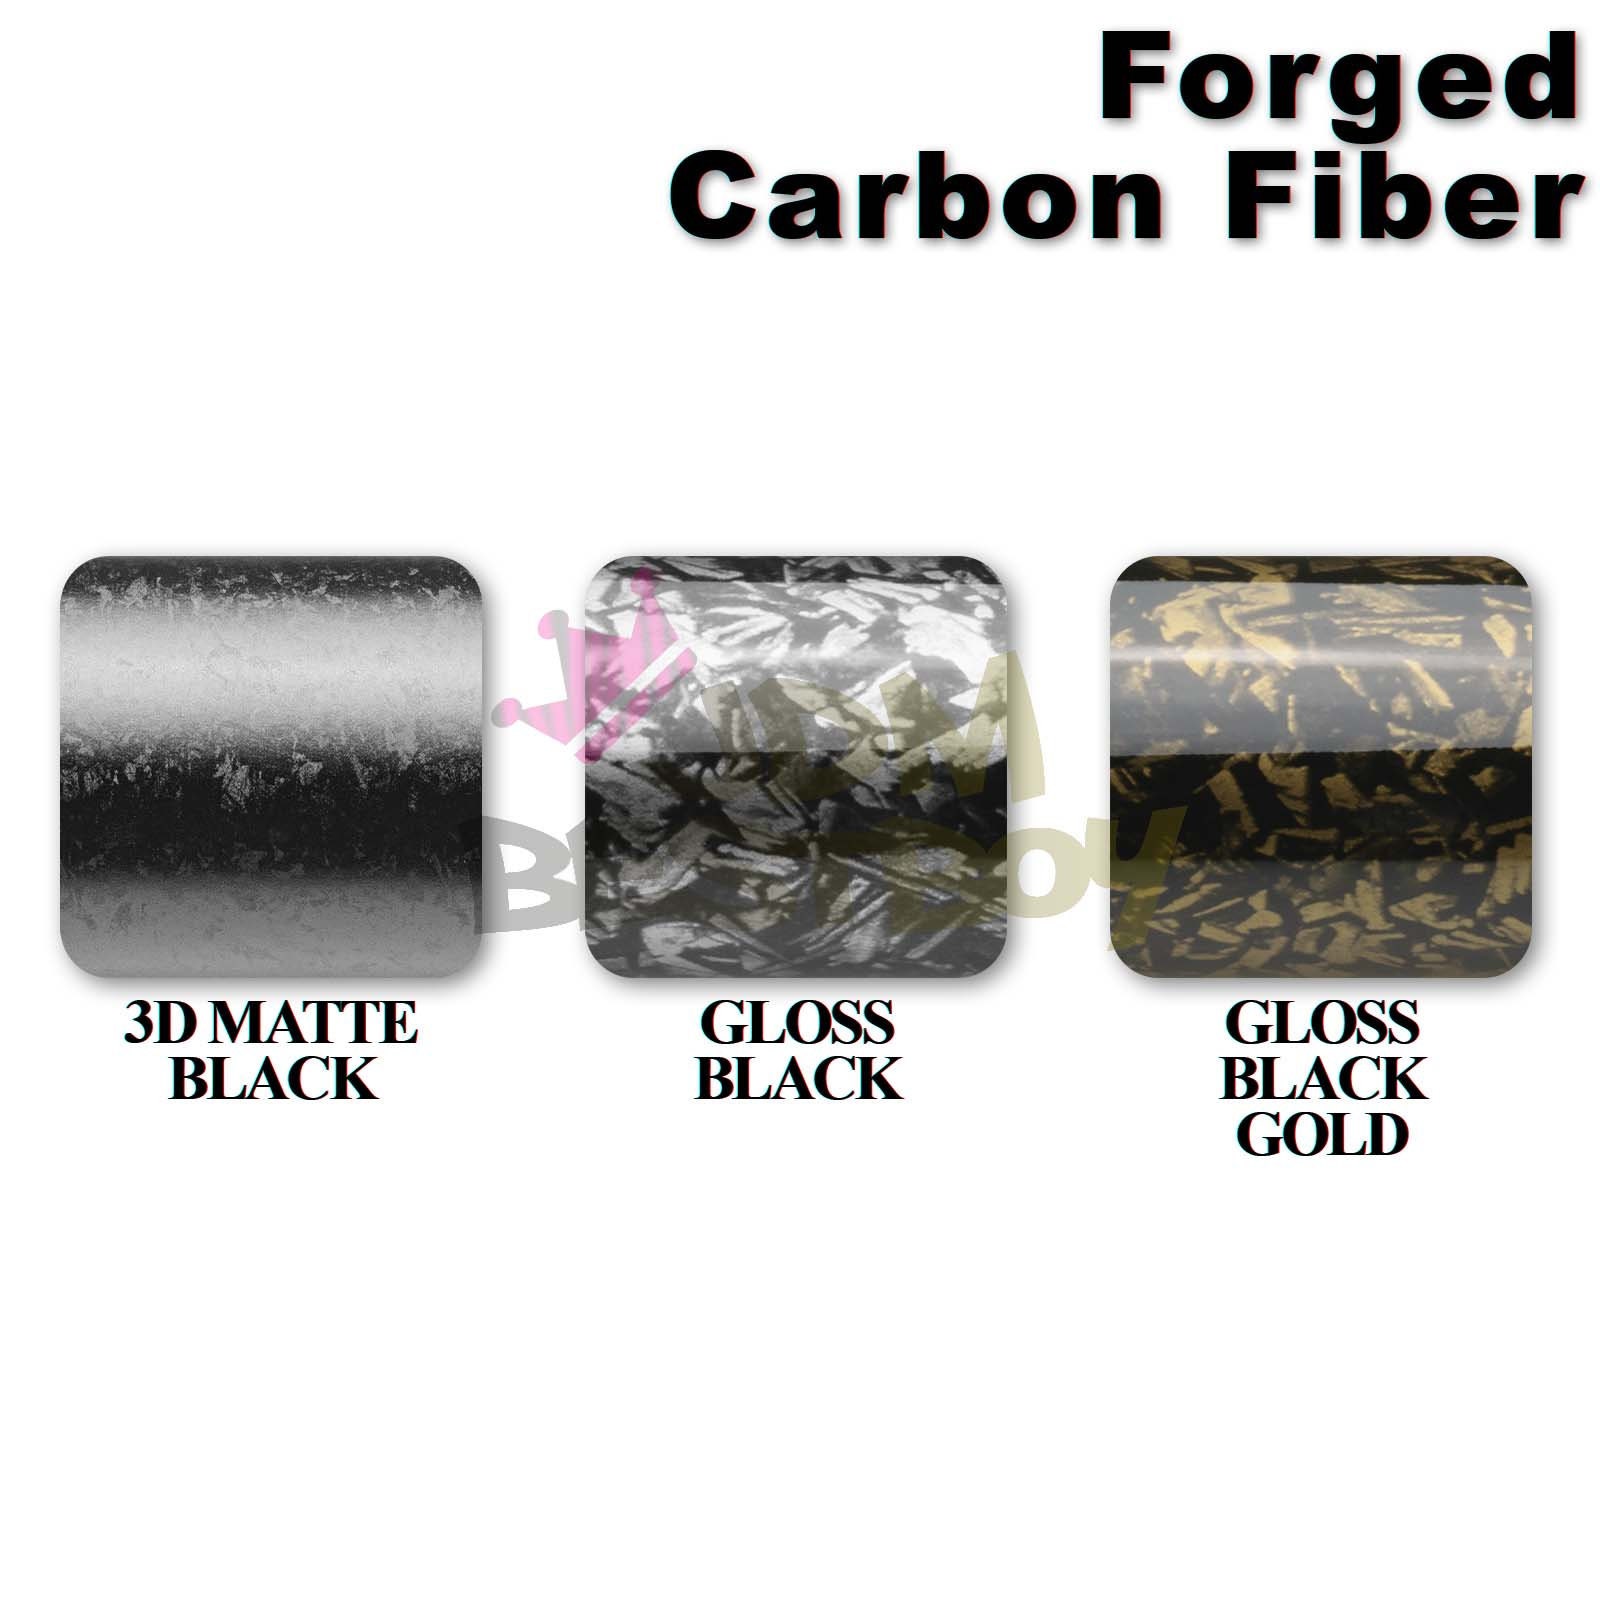 24K Chopped Forged Carbon Fiber Gloss Silver Vinyl Wrap